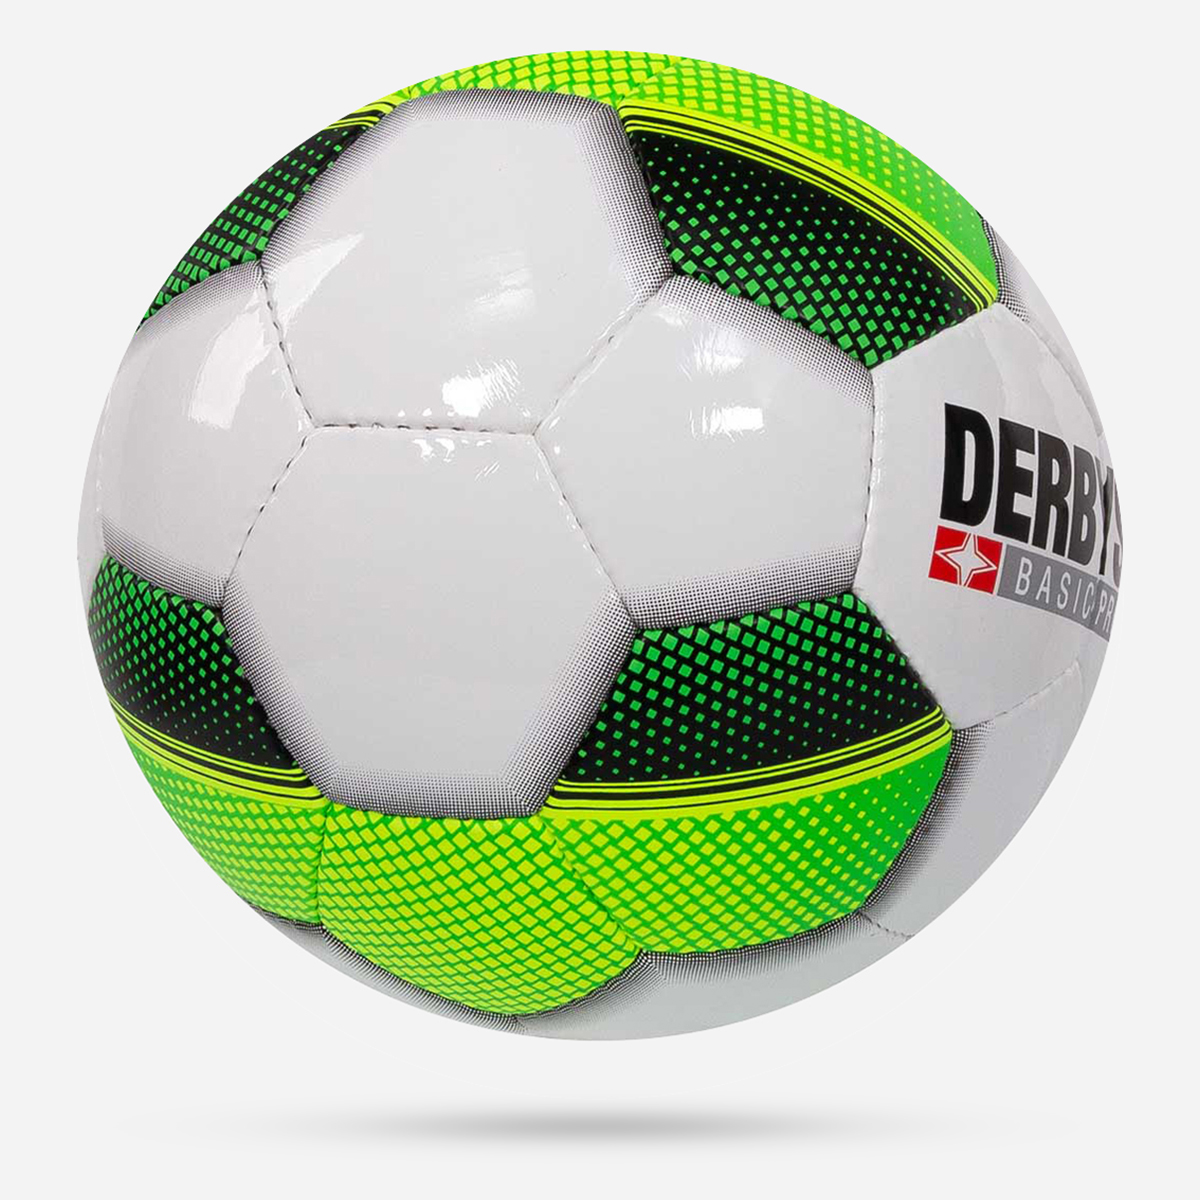 Democratie nachtmerrie apotheker Derbystar Futsal Basic Pro TT | 4 | 98671